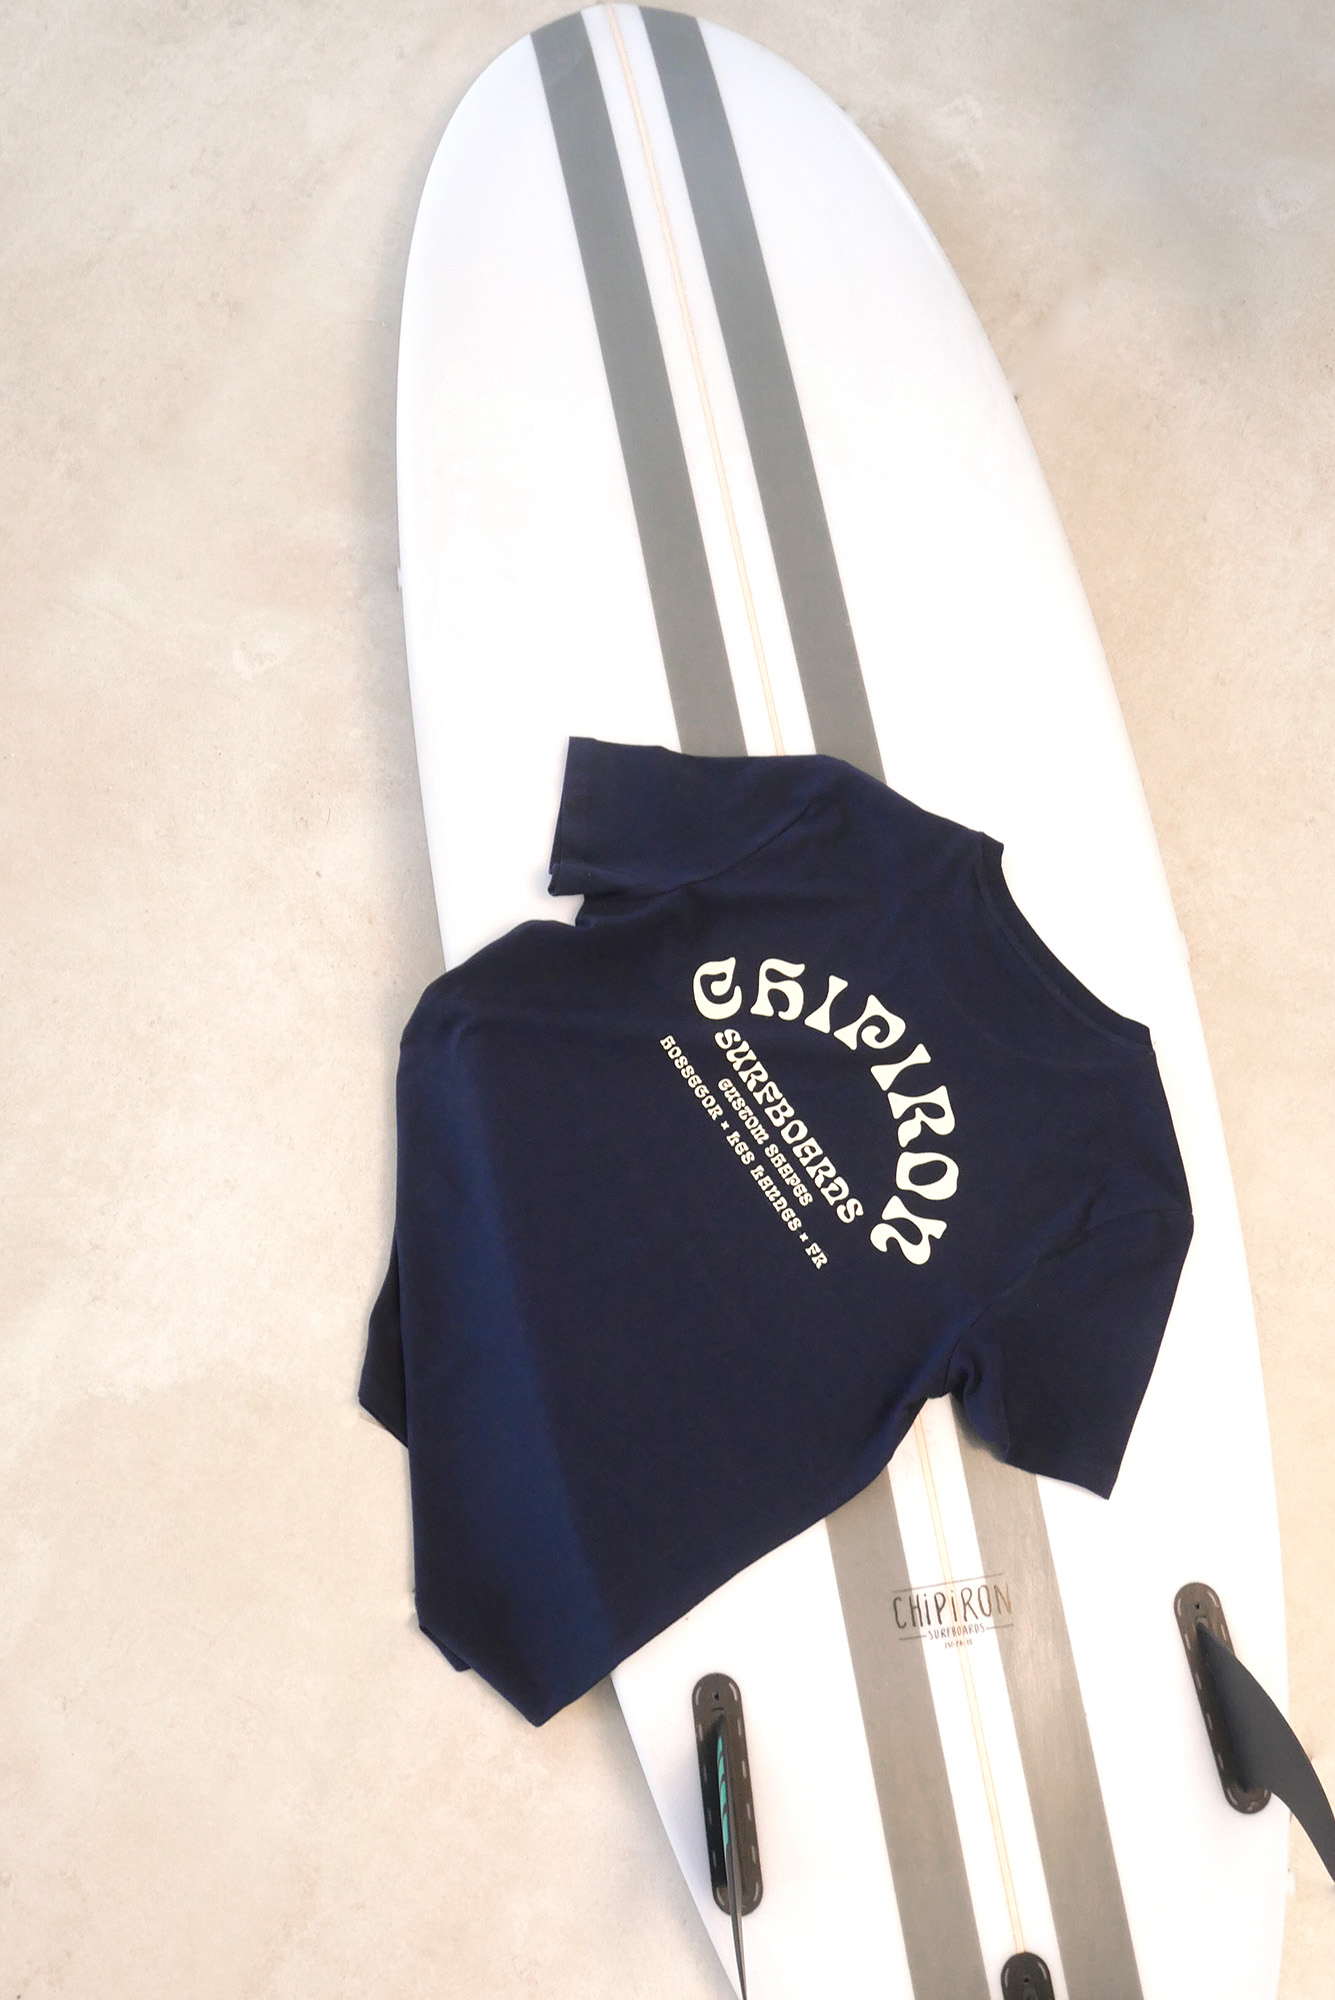 T-shirt Custom Shapes 2023 Chipiron Surfboards